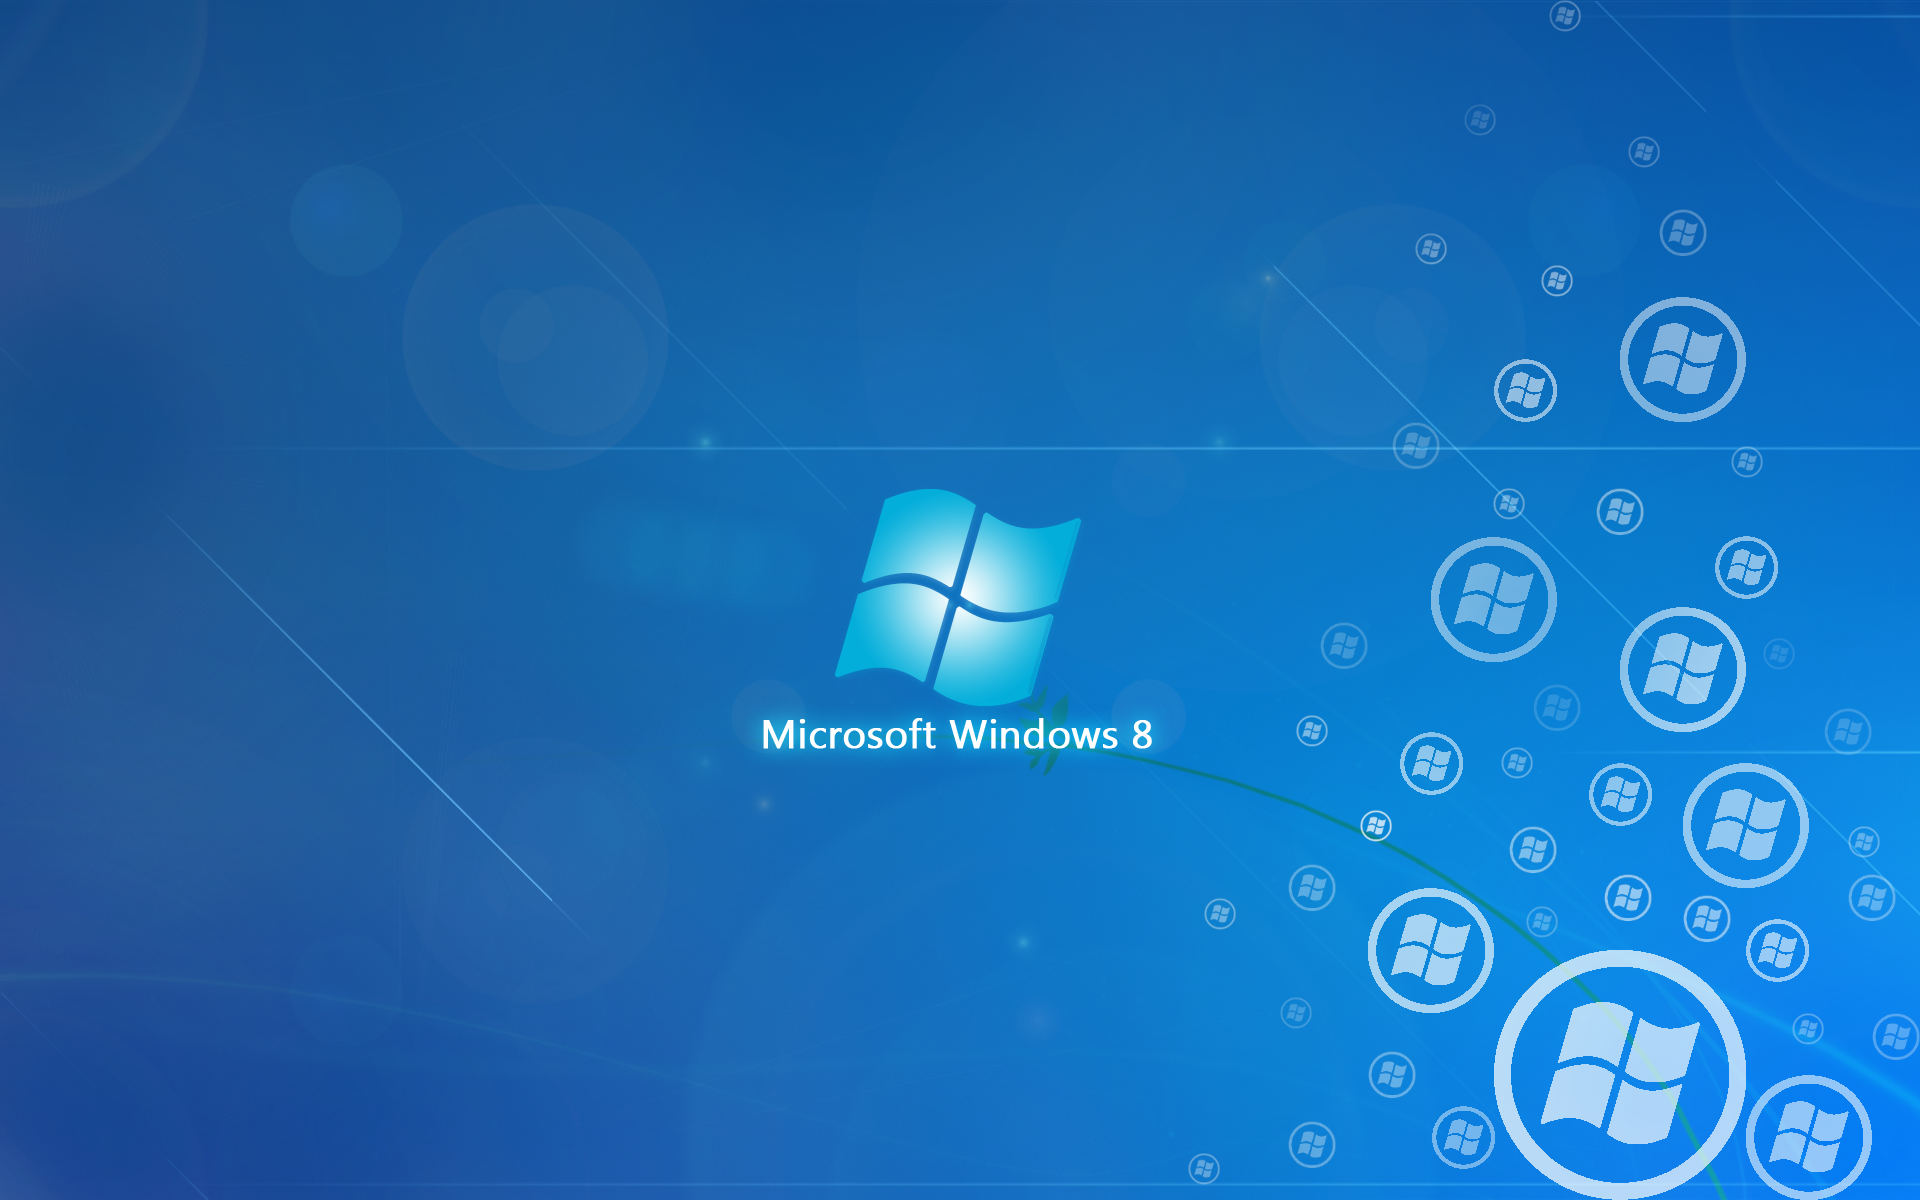 Official Windows 8 Wallpaper HD Resolution for Desktop - Uncalke.com